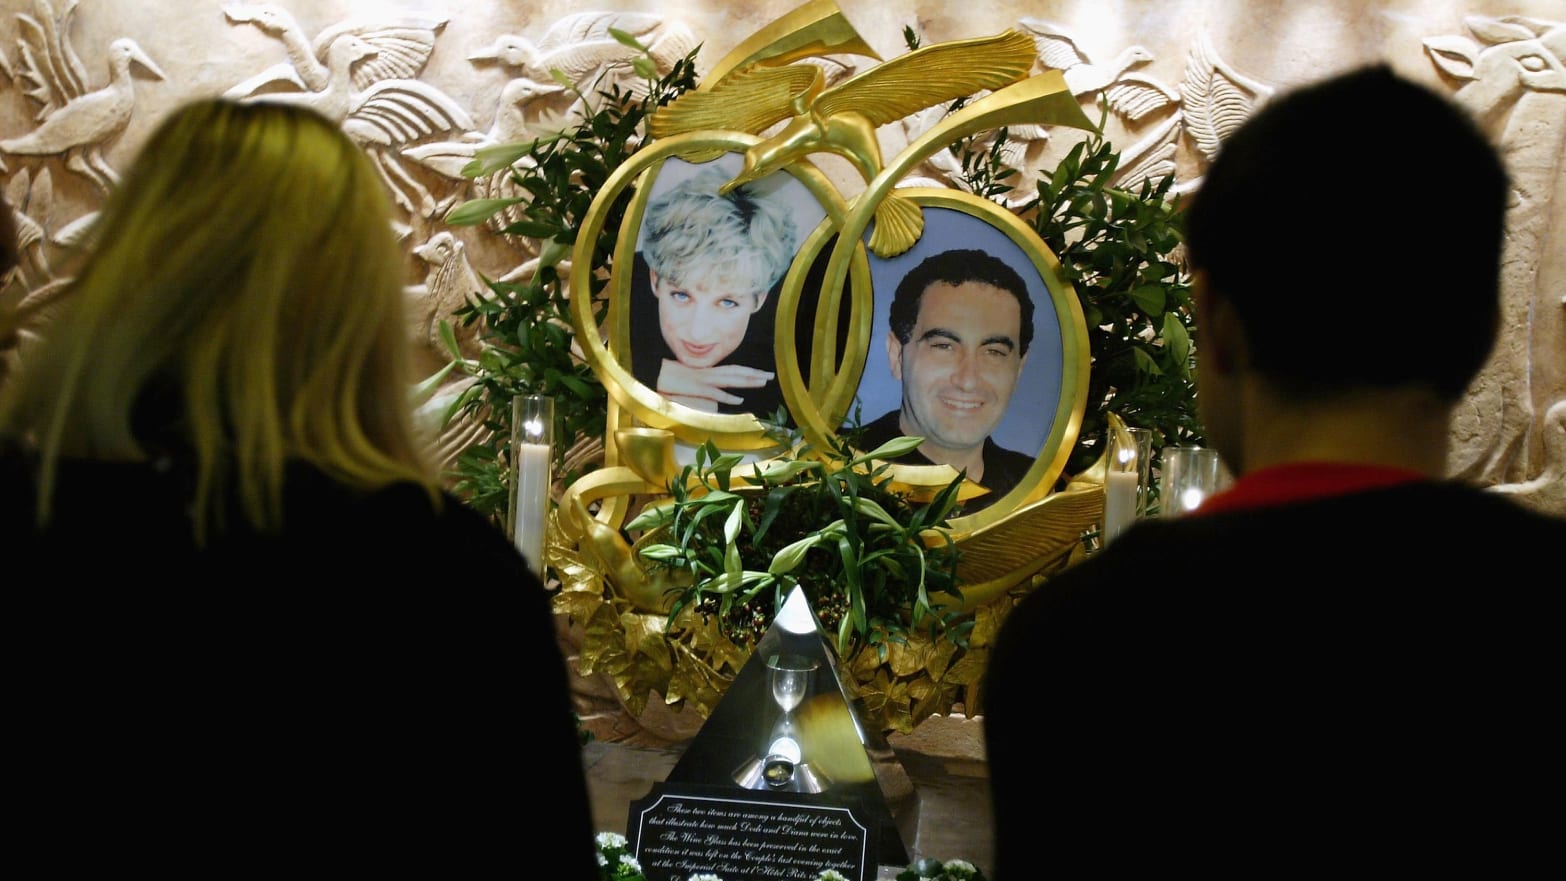 A memorial to Princess Diana and Dodi Fayed